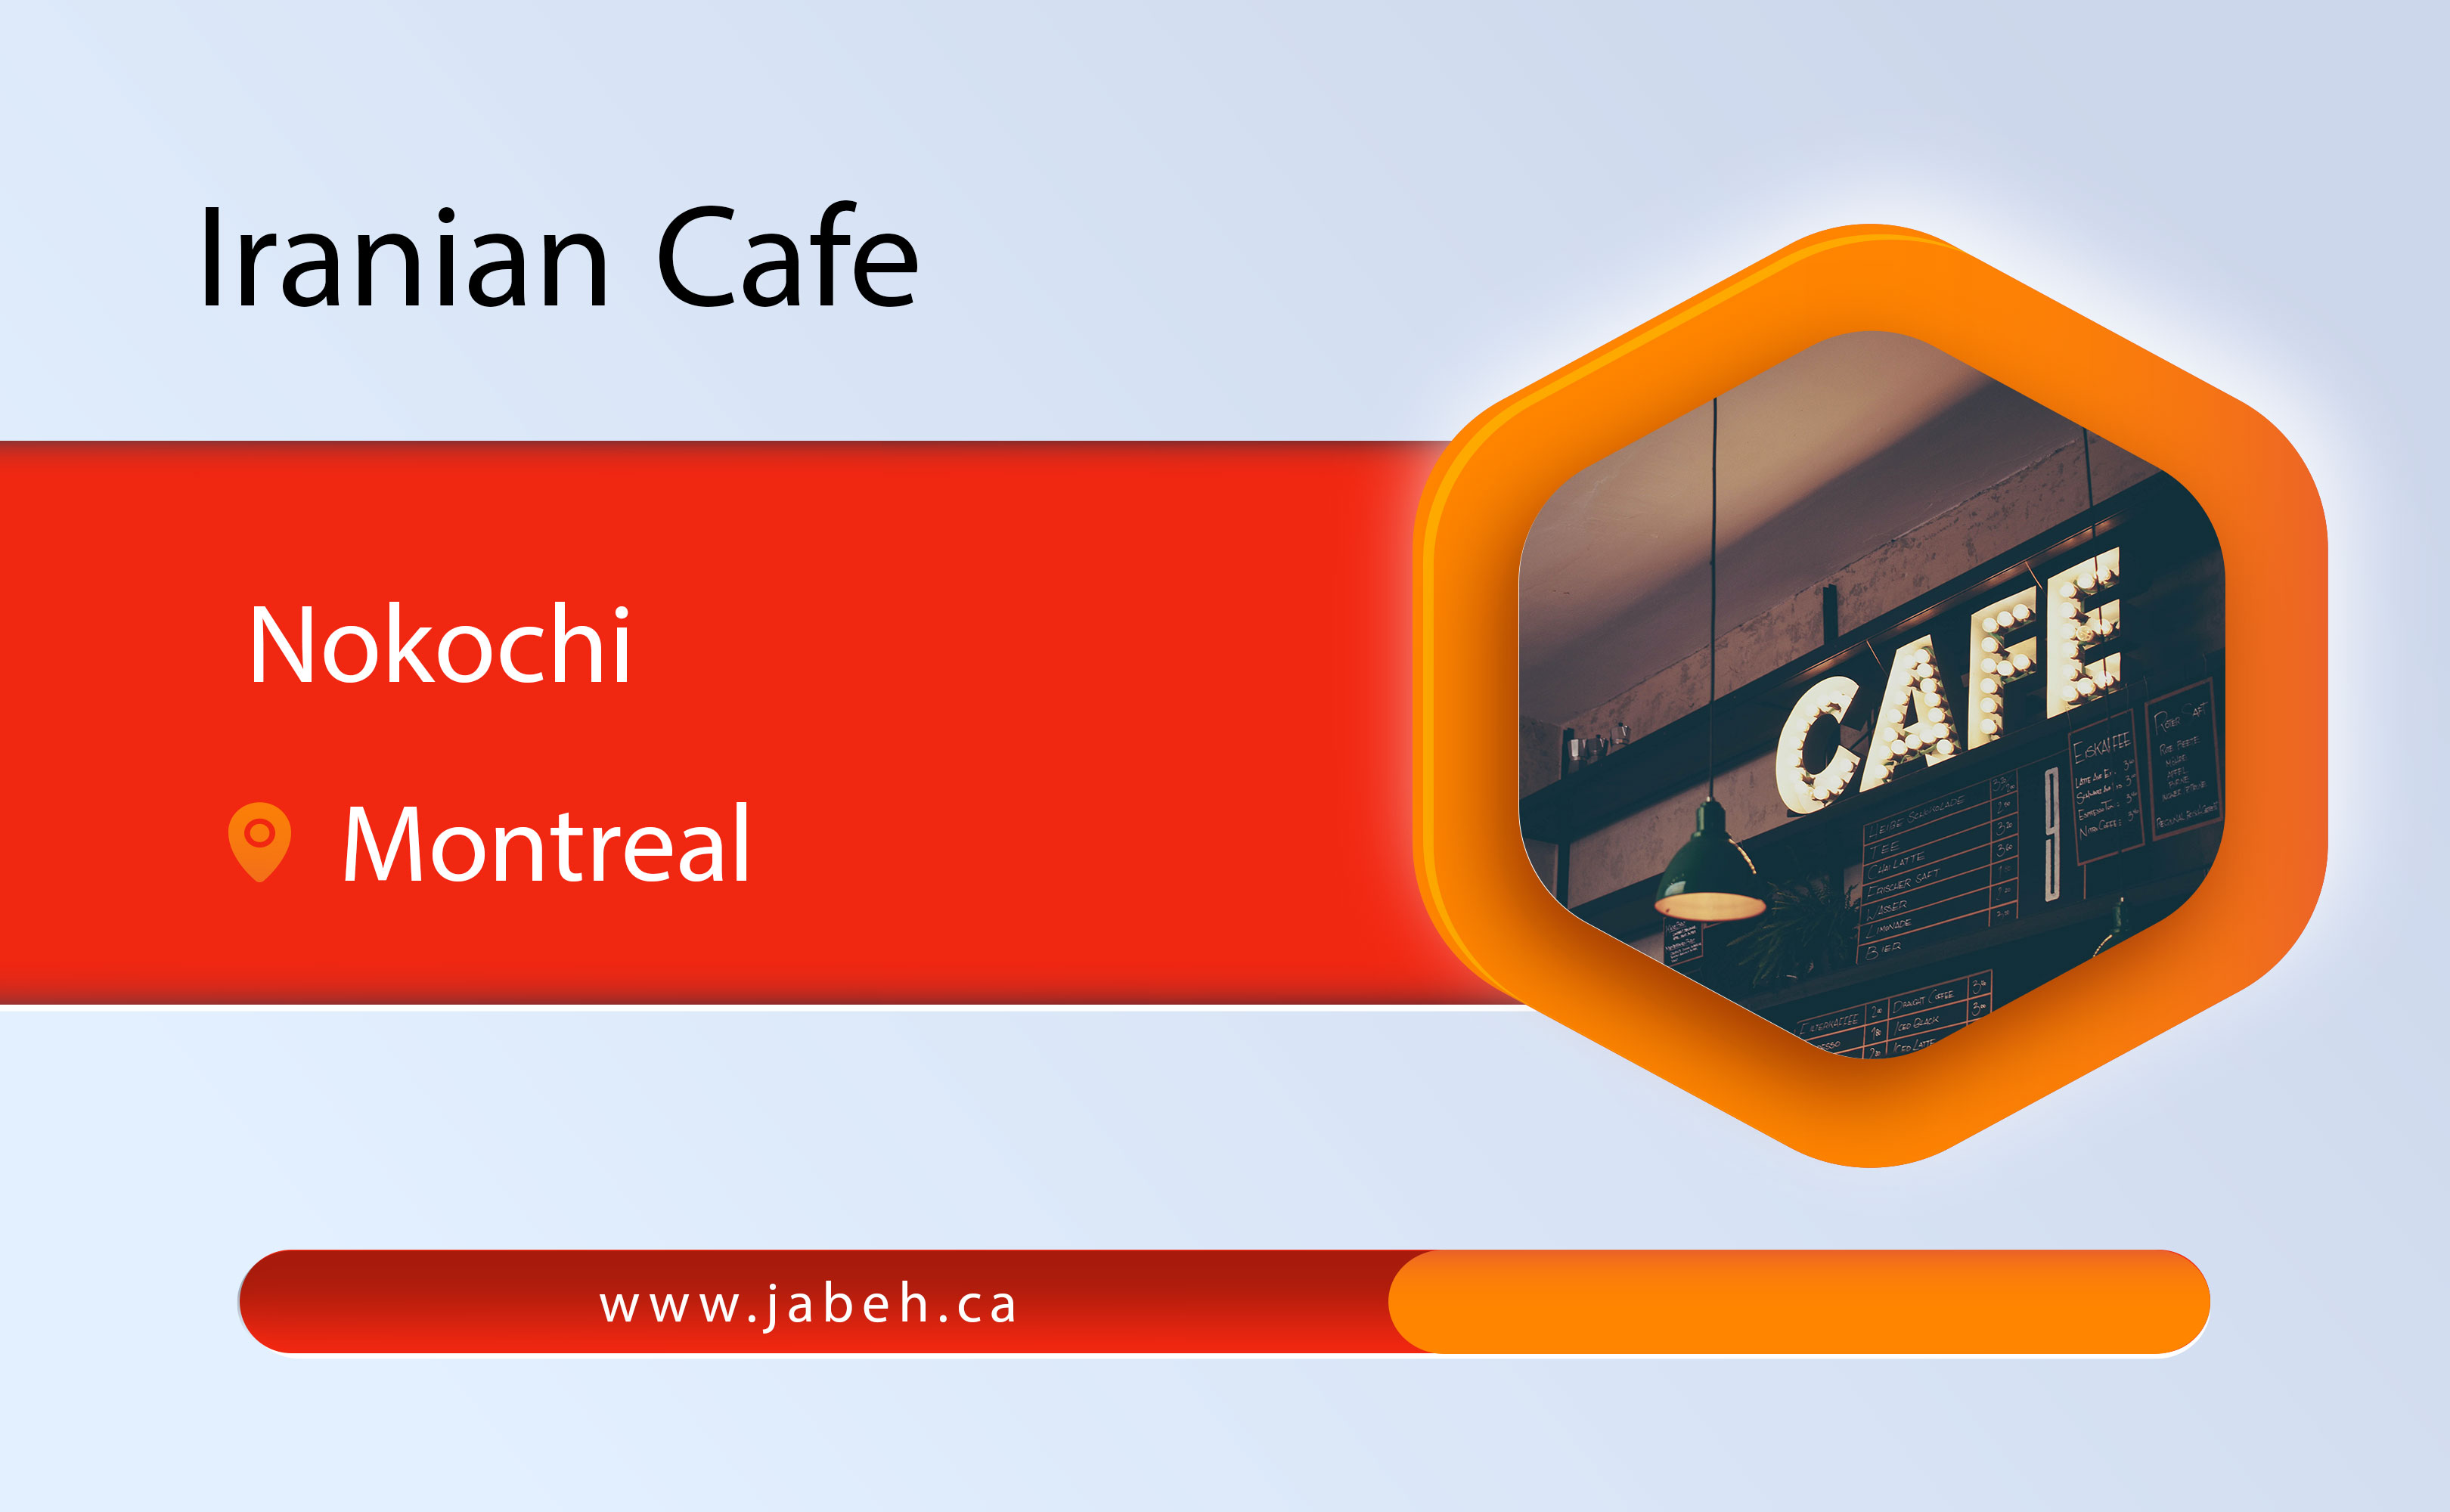 Nokochi Iranian Cafe in Montreal